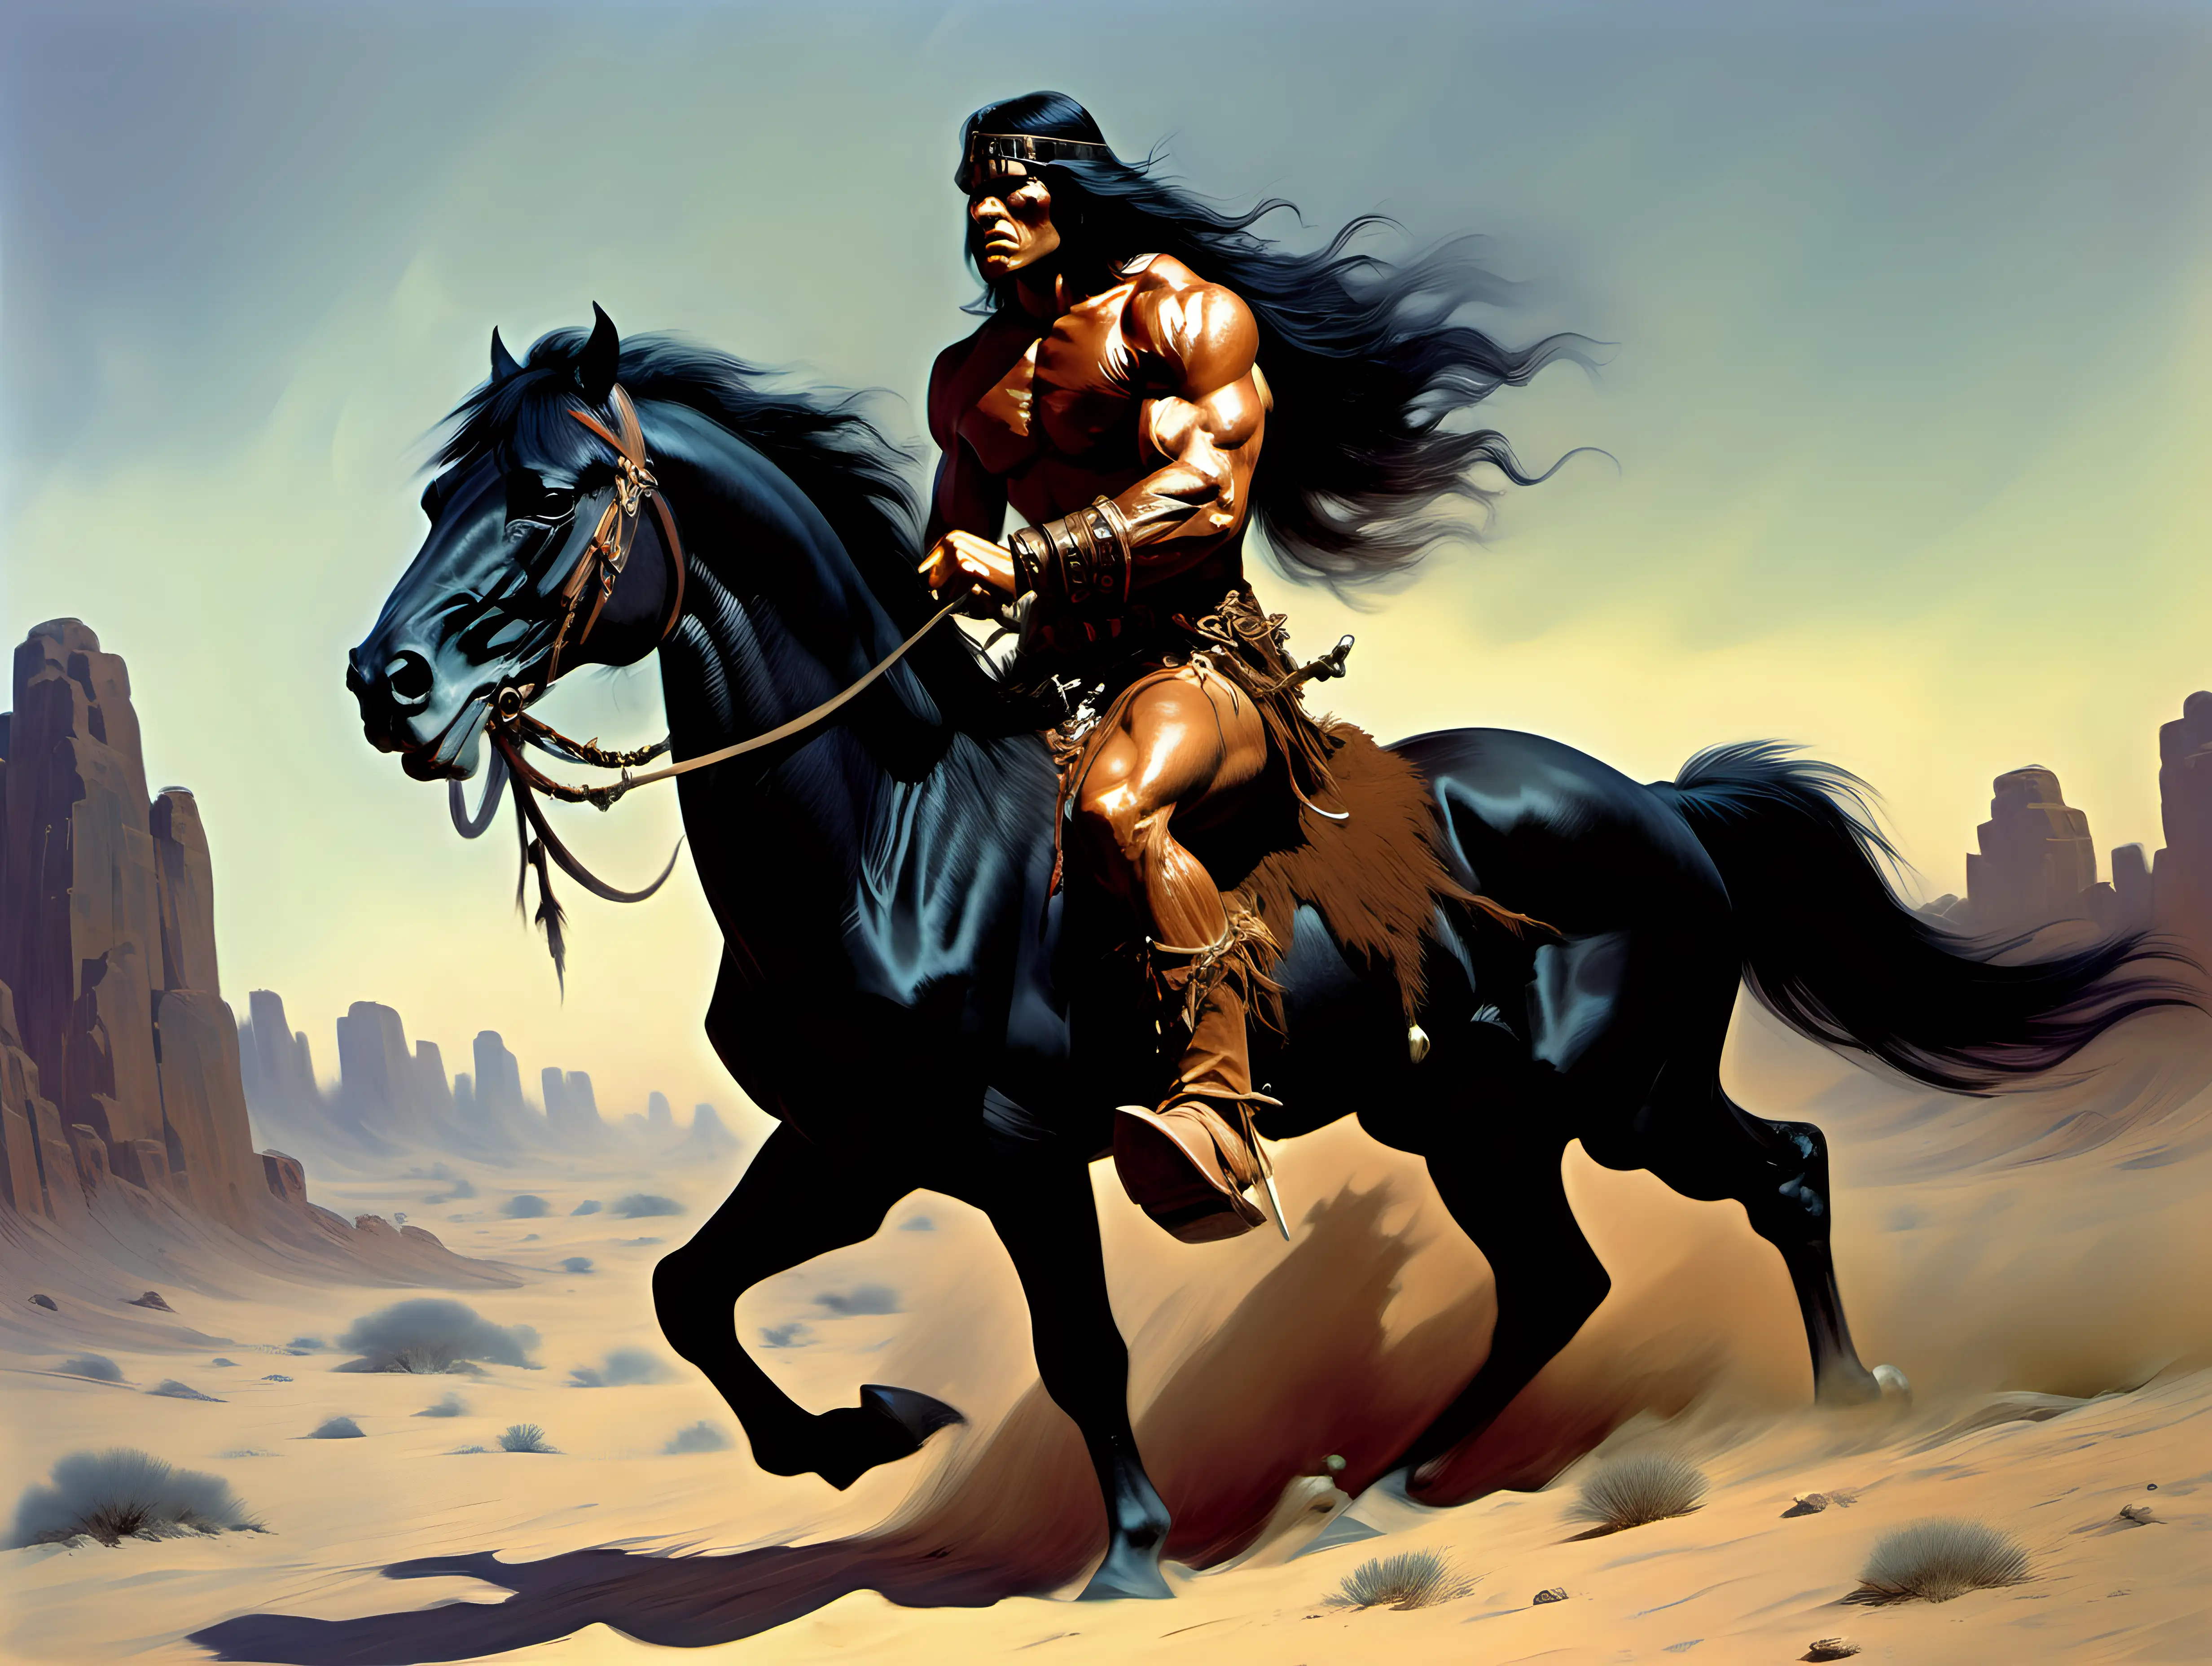 conan the barbarian riding a black Arabian horse in the desert Frank Frazetta style